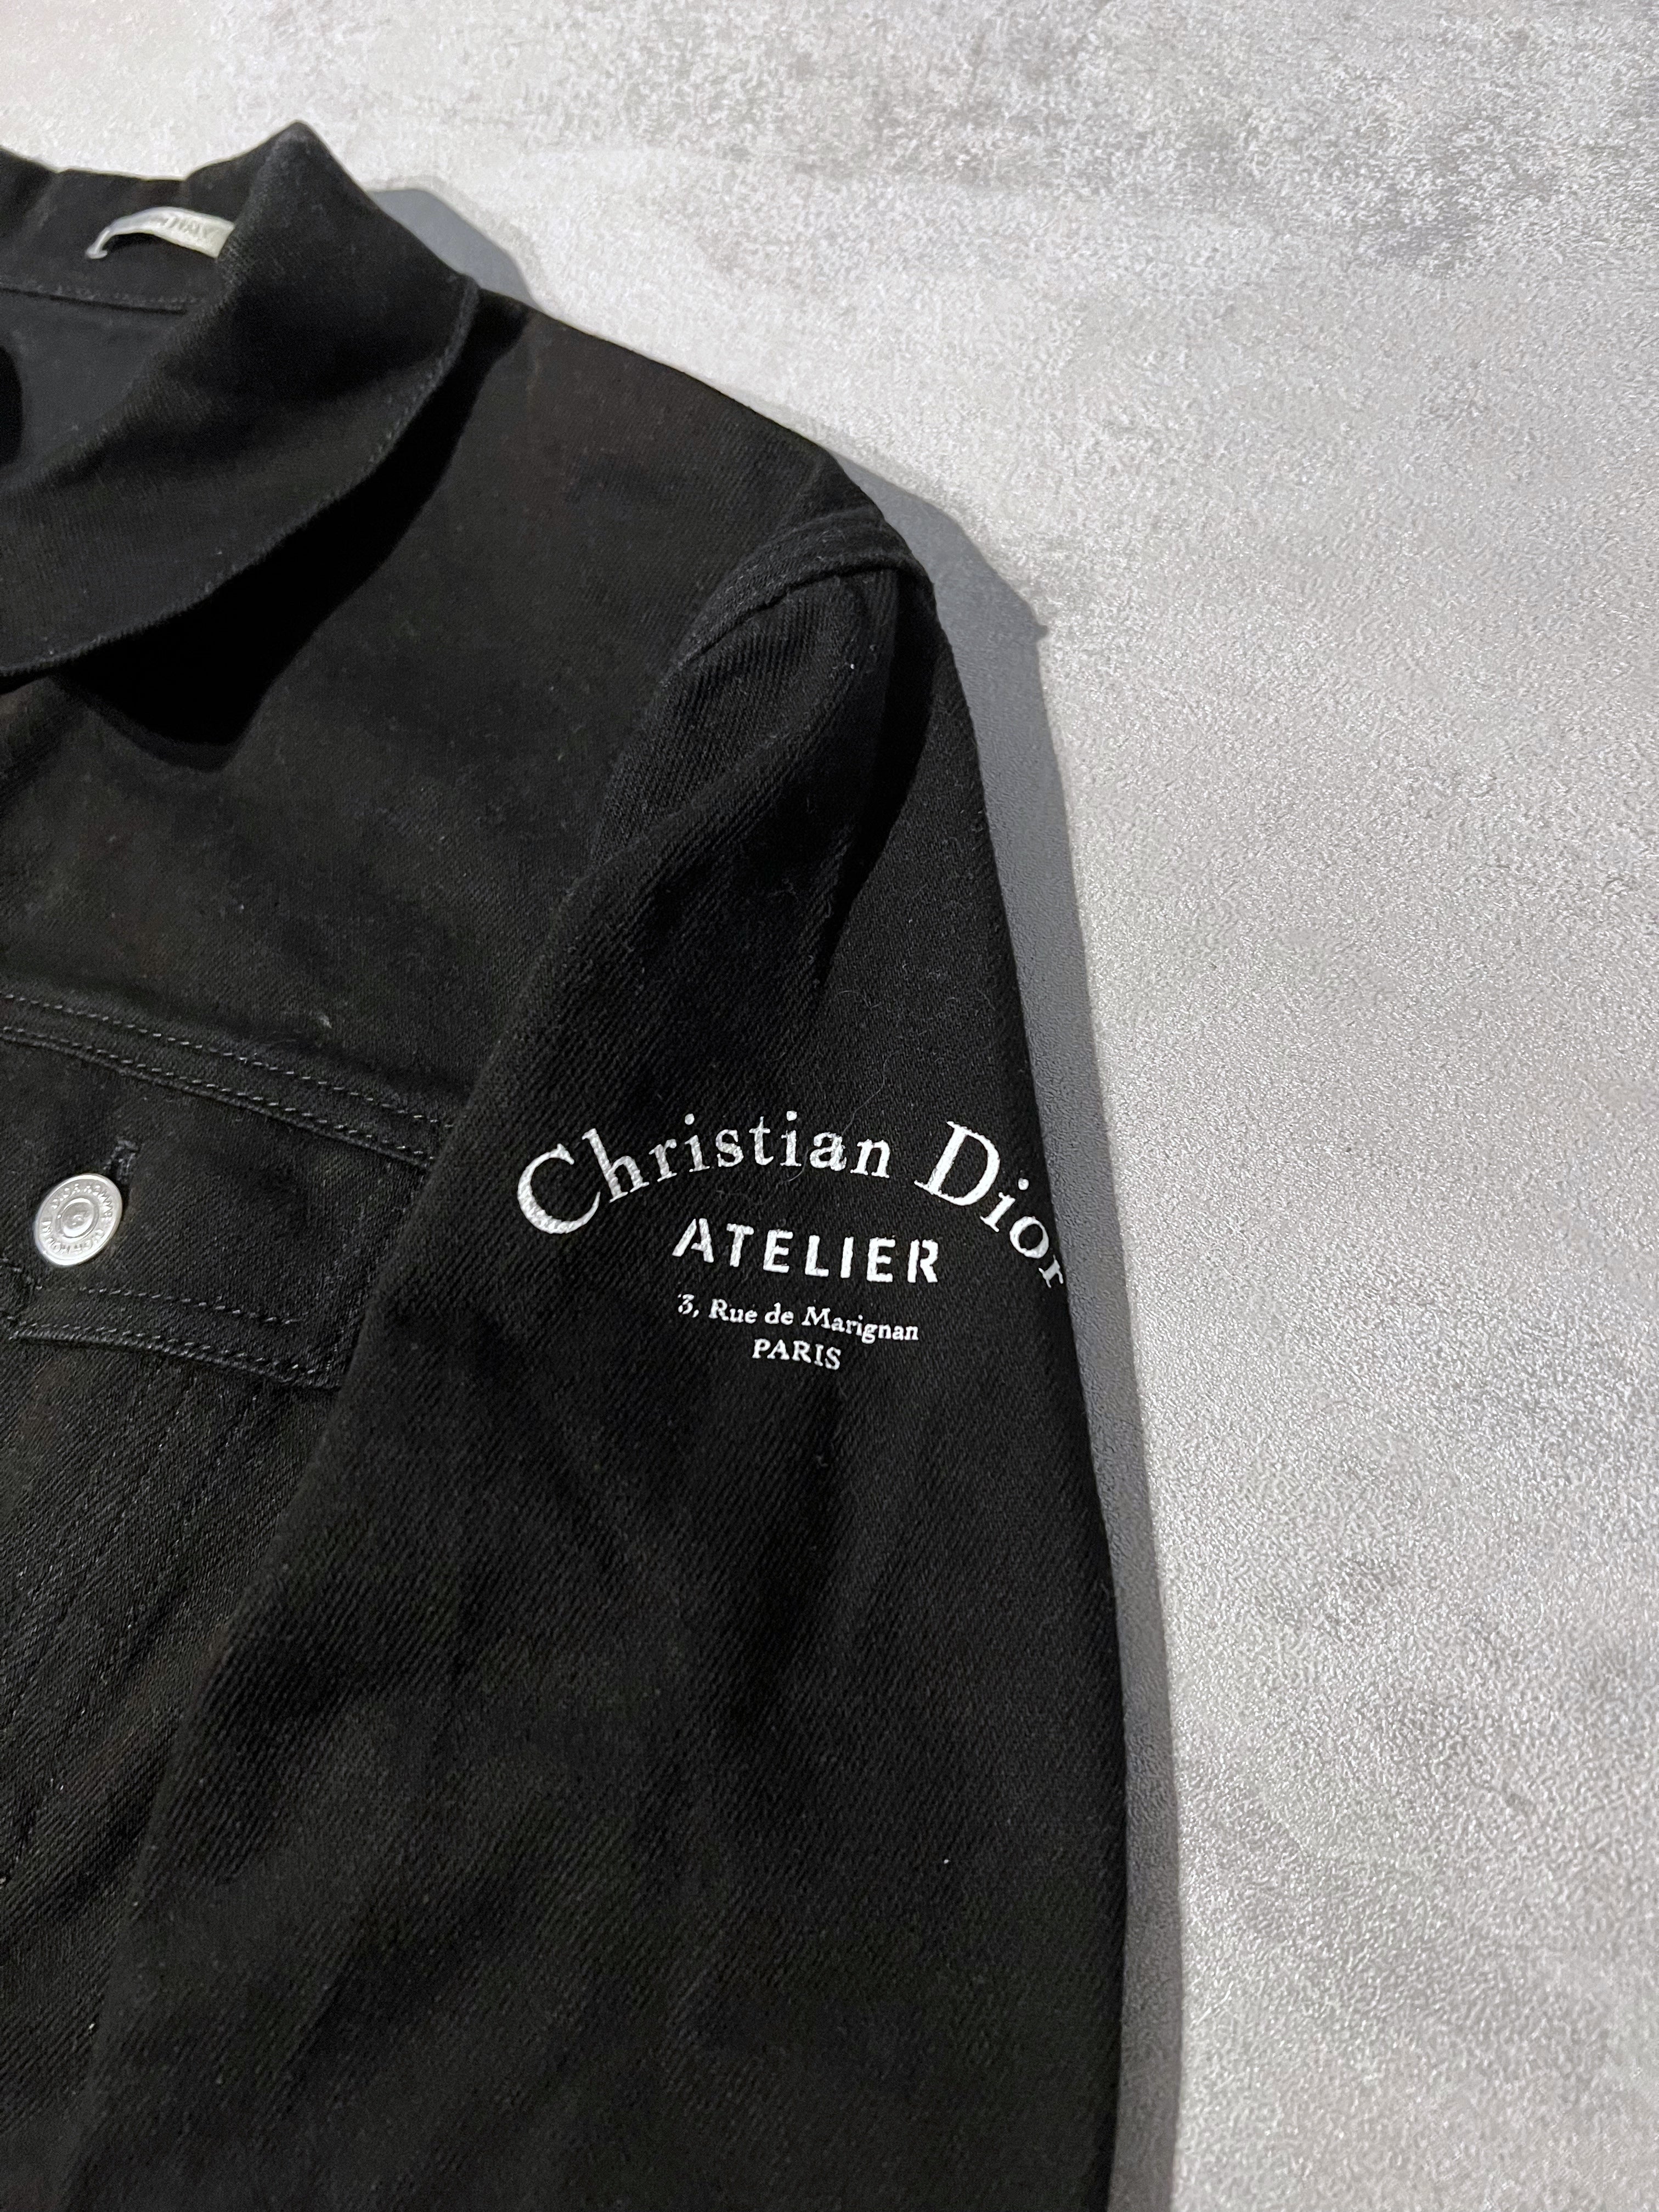 Christian Dior Atelier Denim Jacket